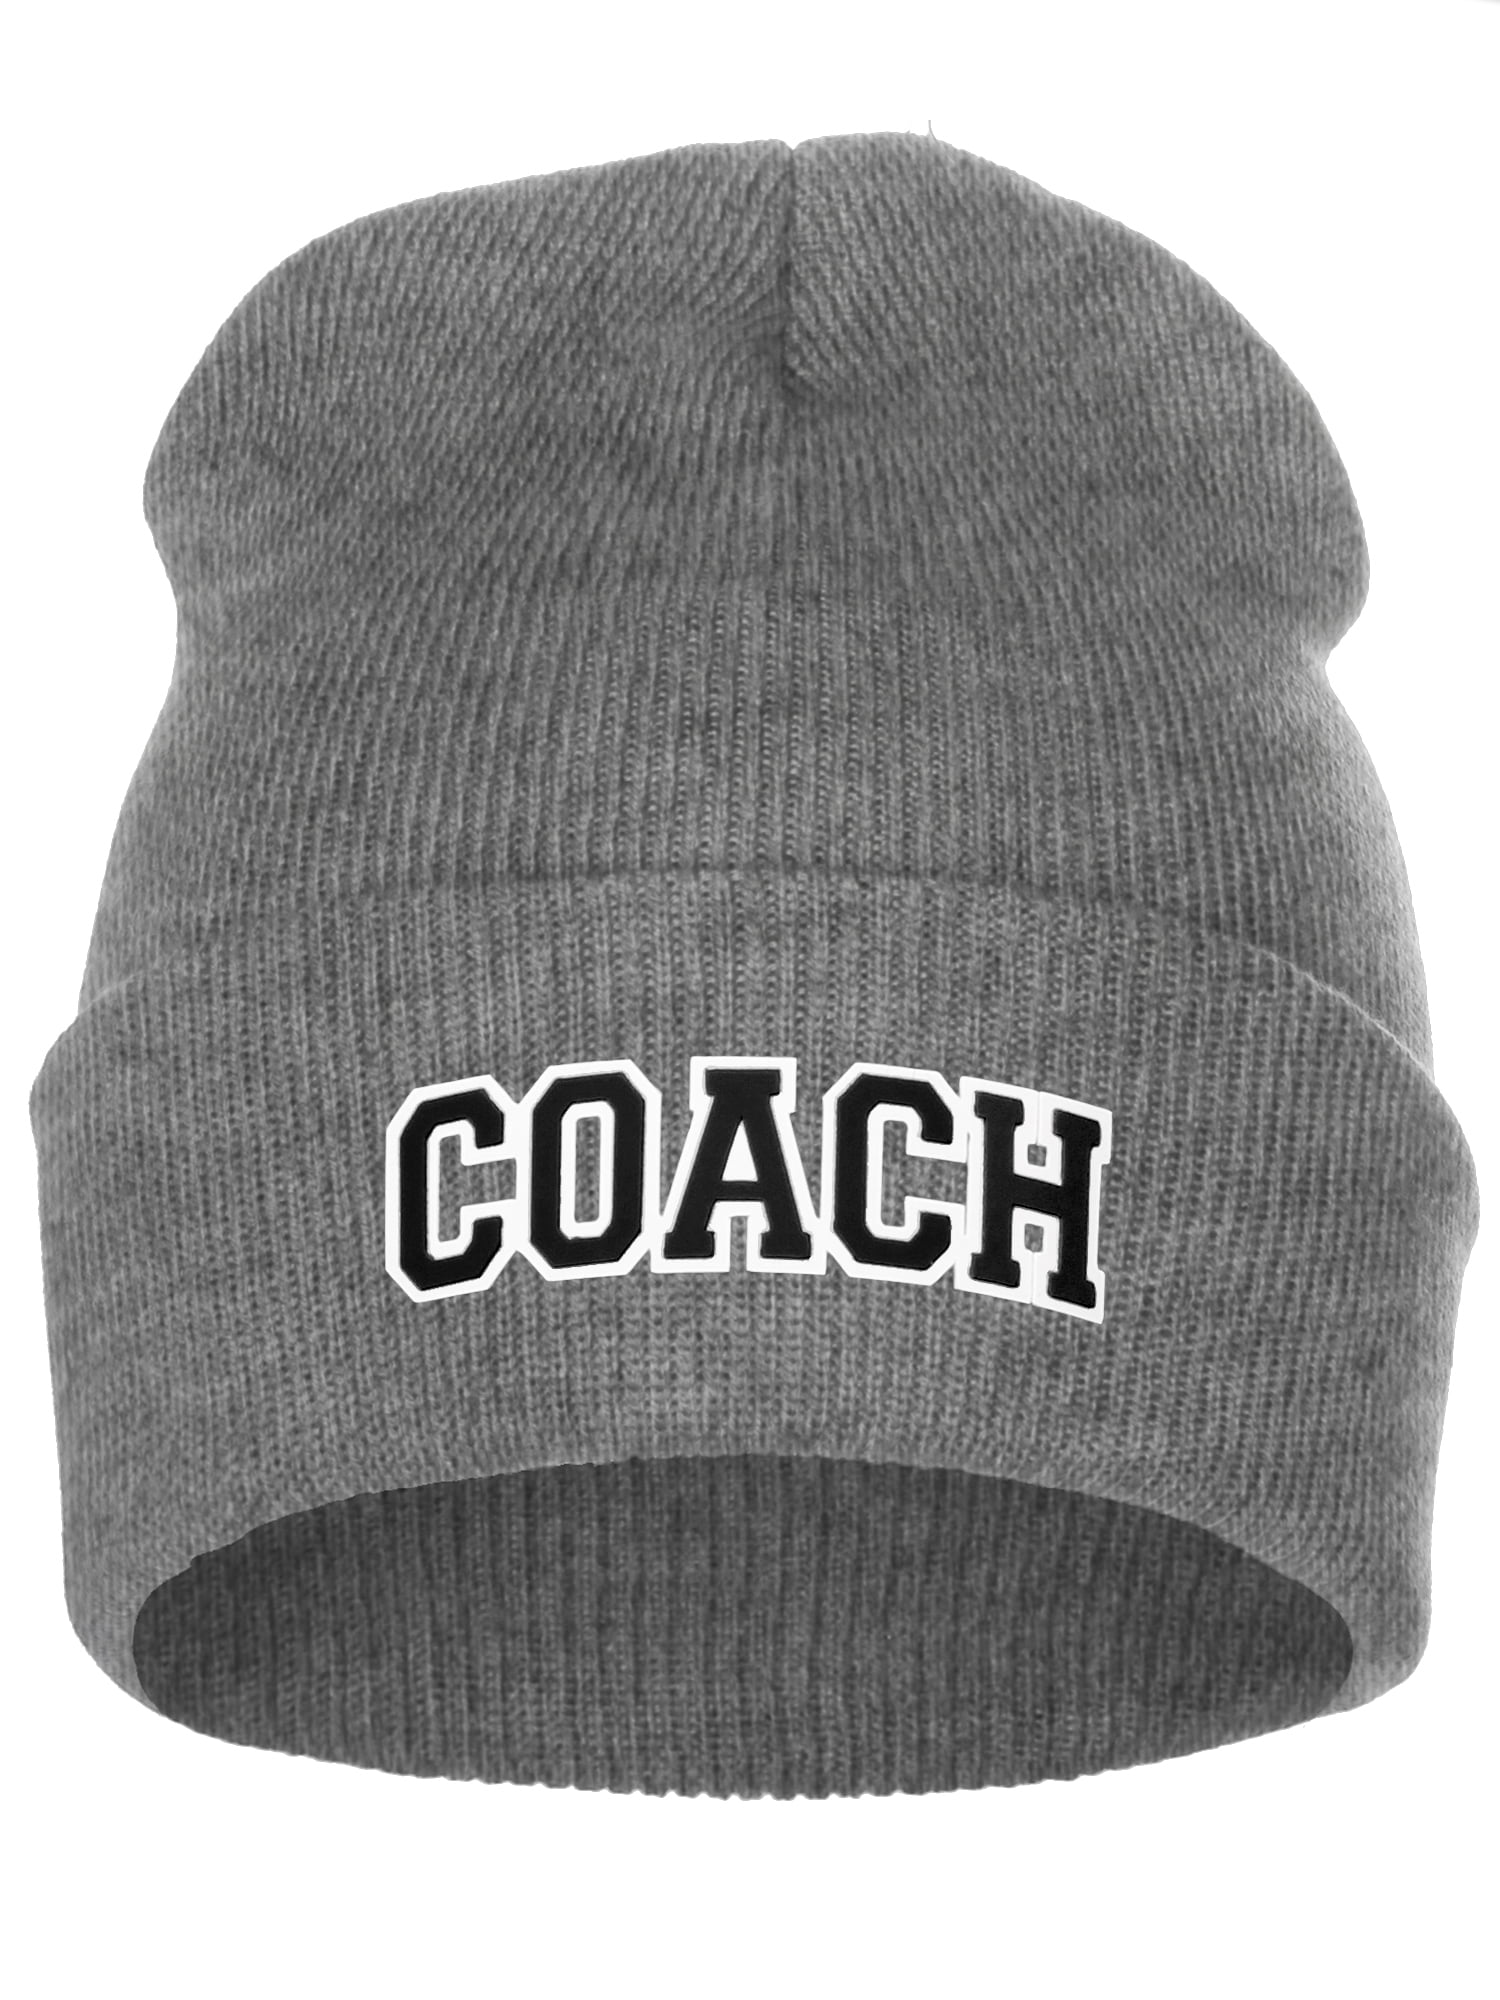 Winter Black Nay I&W Sports Team Coach Hat, Knit Beanie Arch Beanie Cuffed White Letters